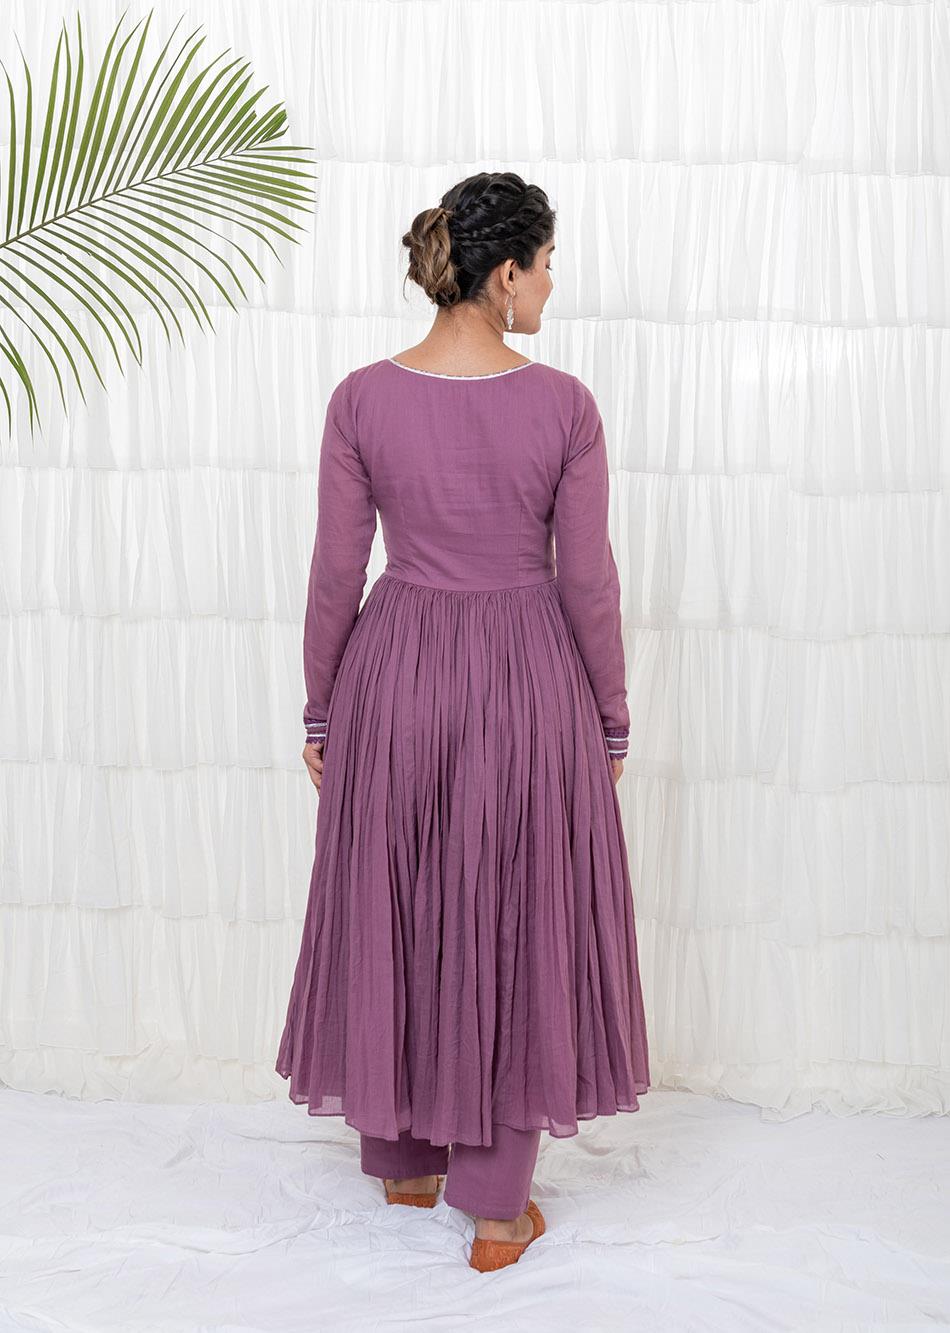 110 YaVee ideas in 2023  long dress design frock for women stylish  dresses